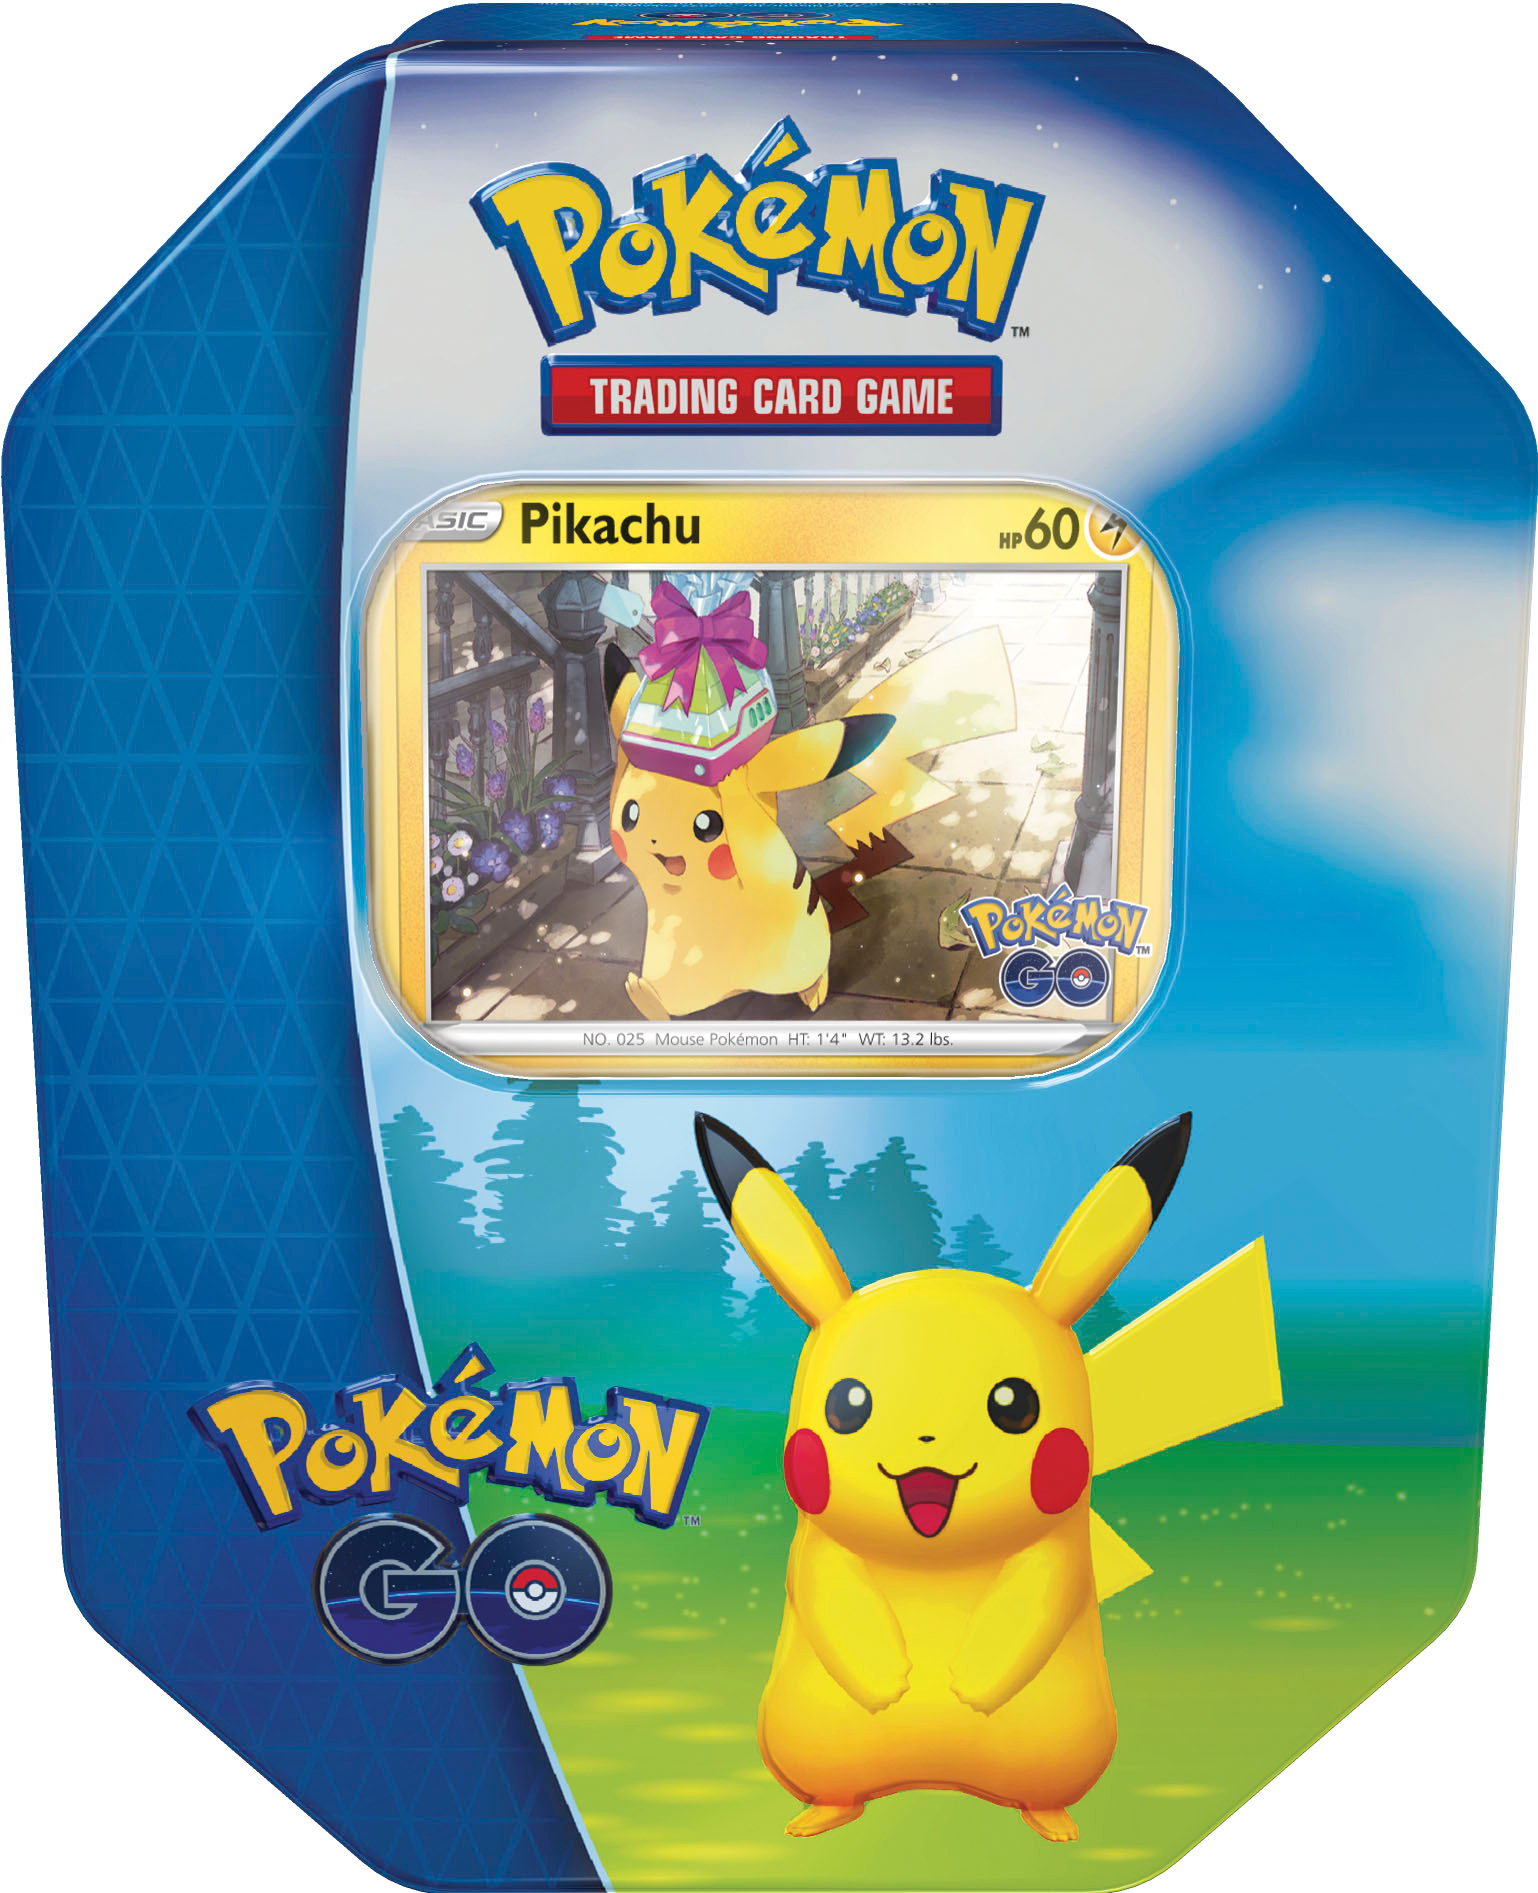 Pokémon Trading Card Game: Pokemon GO Gift Tin (Styles May Vary) $12.99 + Free Shipping